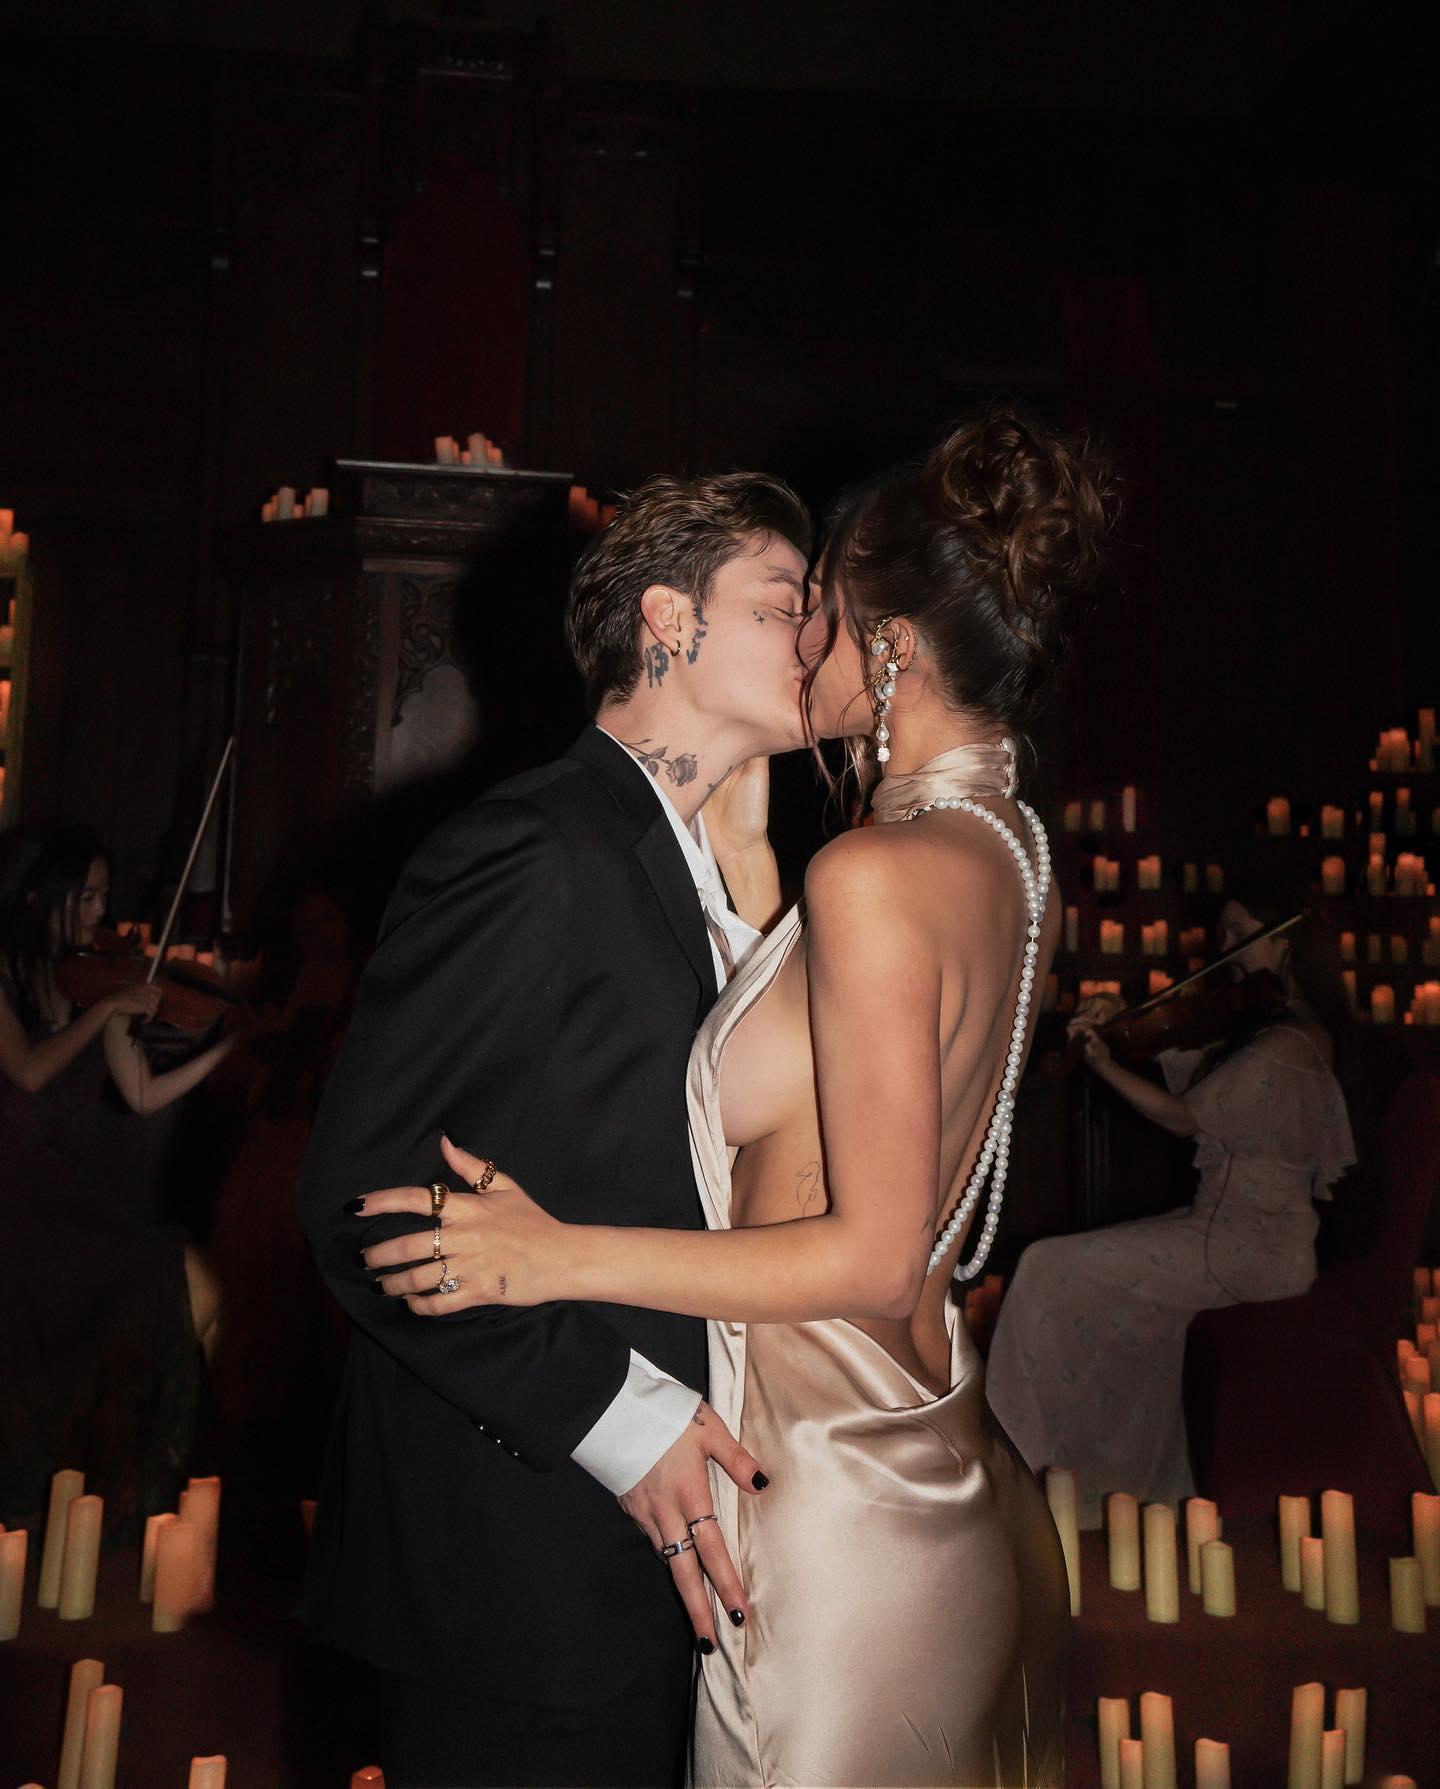 Francesca Farago and Jesse Sullivan are engaged